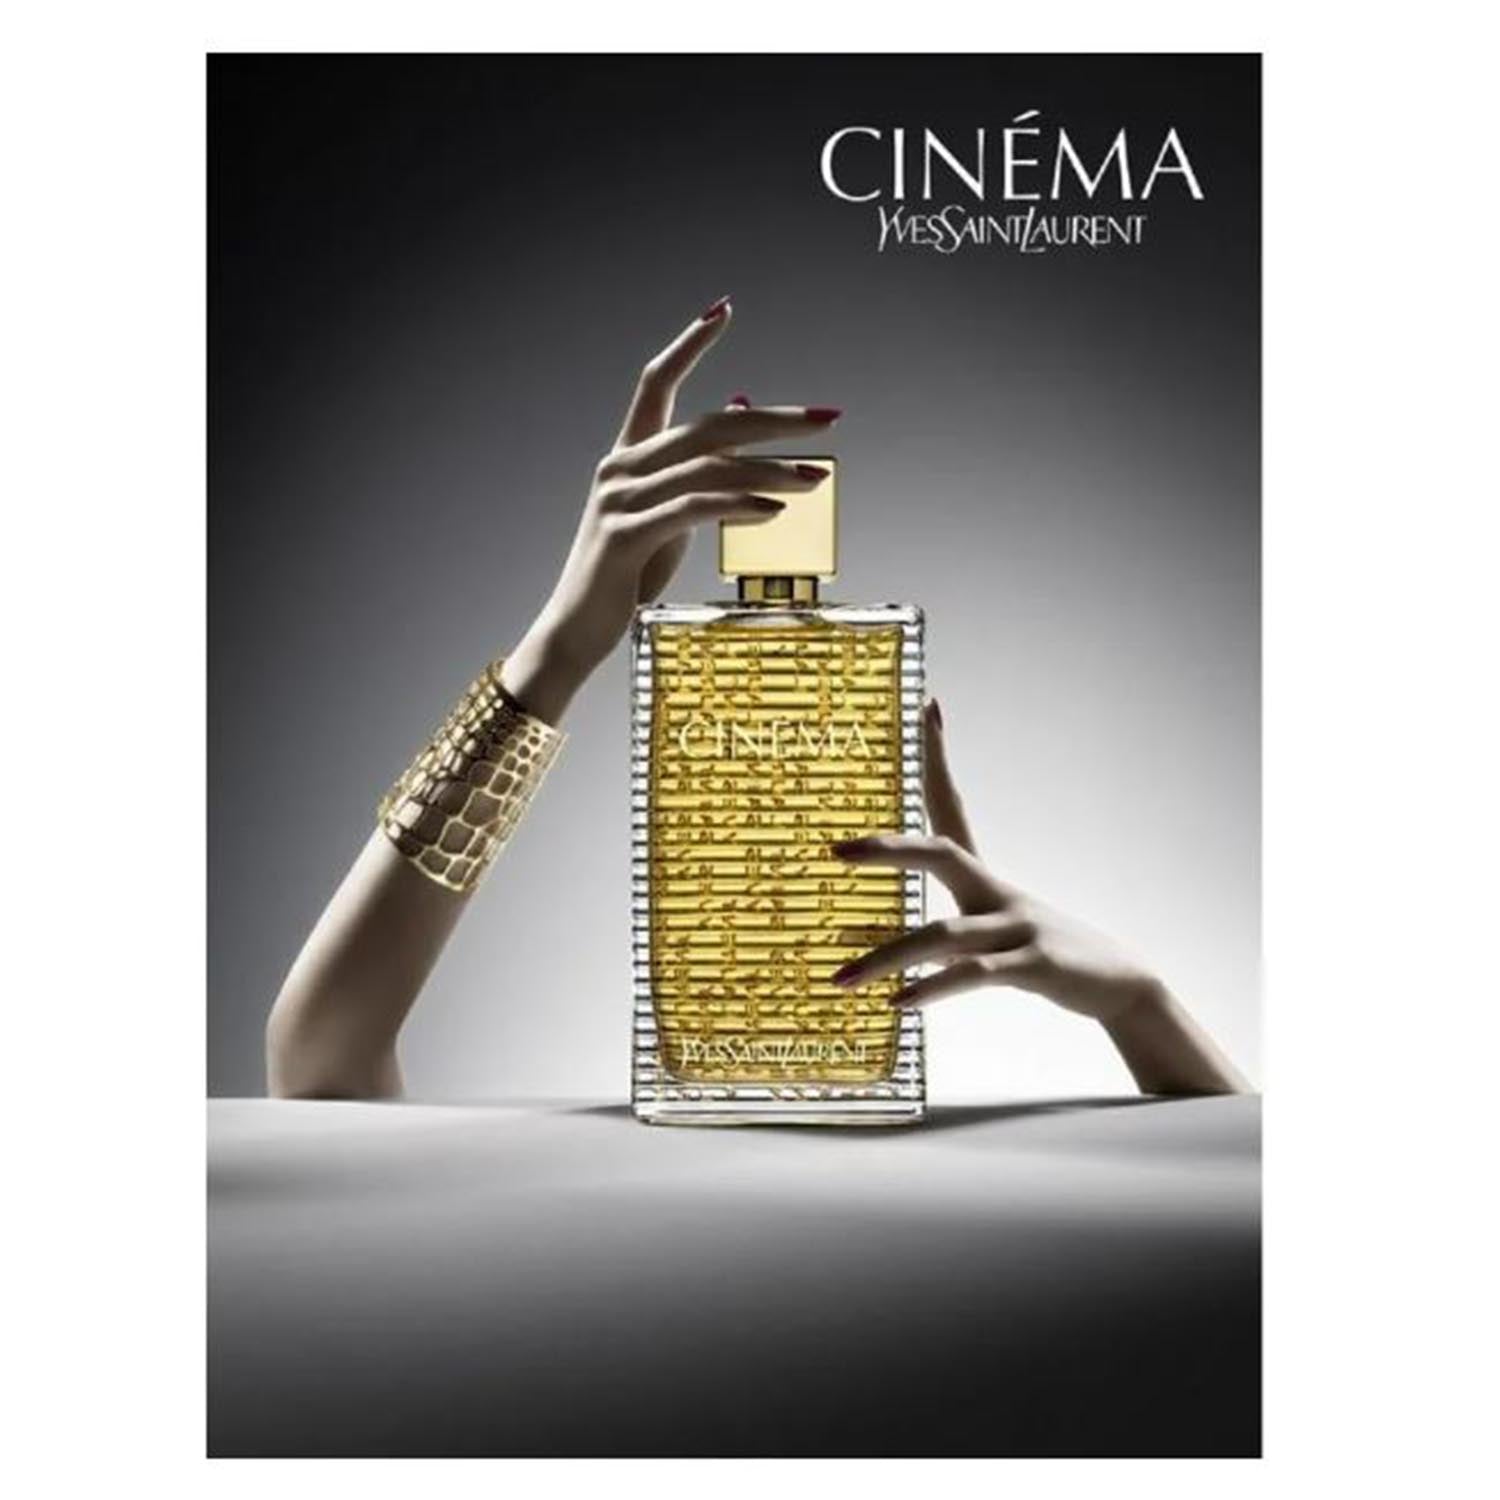 Yves Saint Laurent Cinema Eau De Perfume Spray for Women